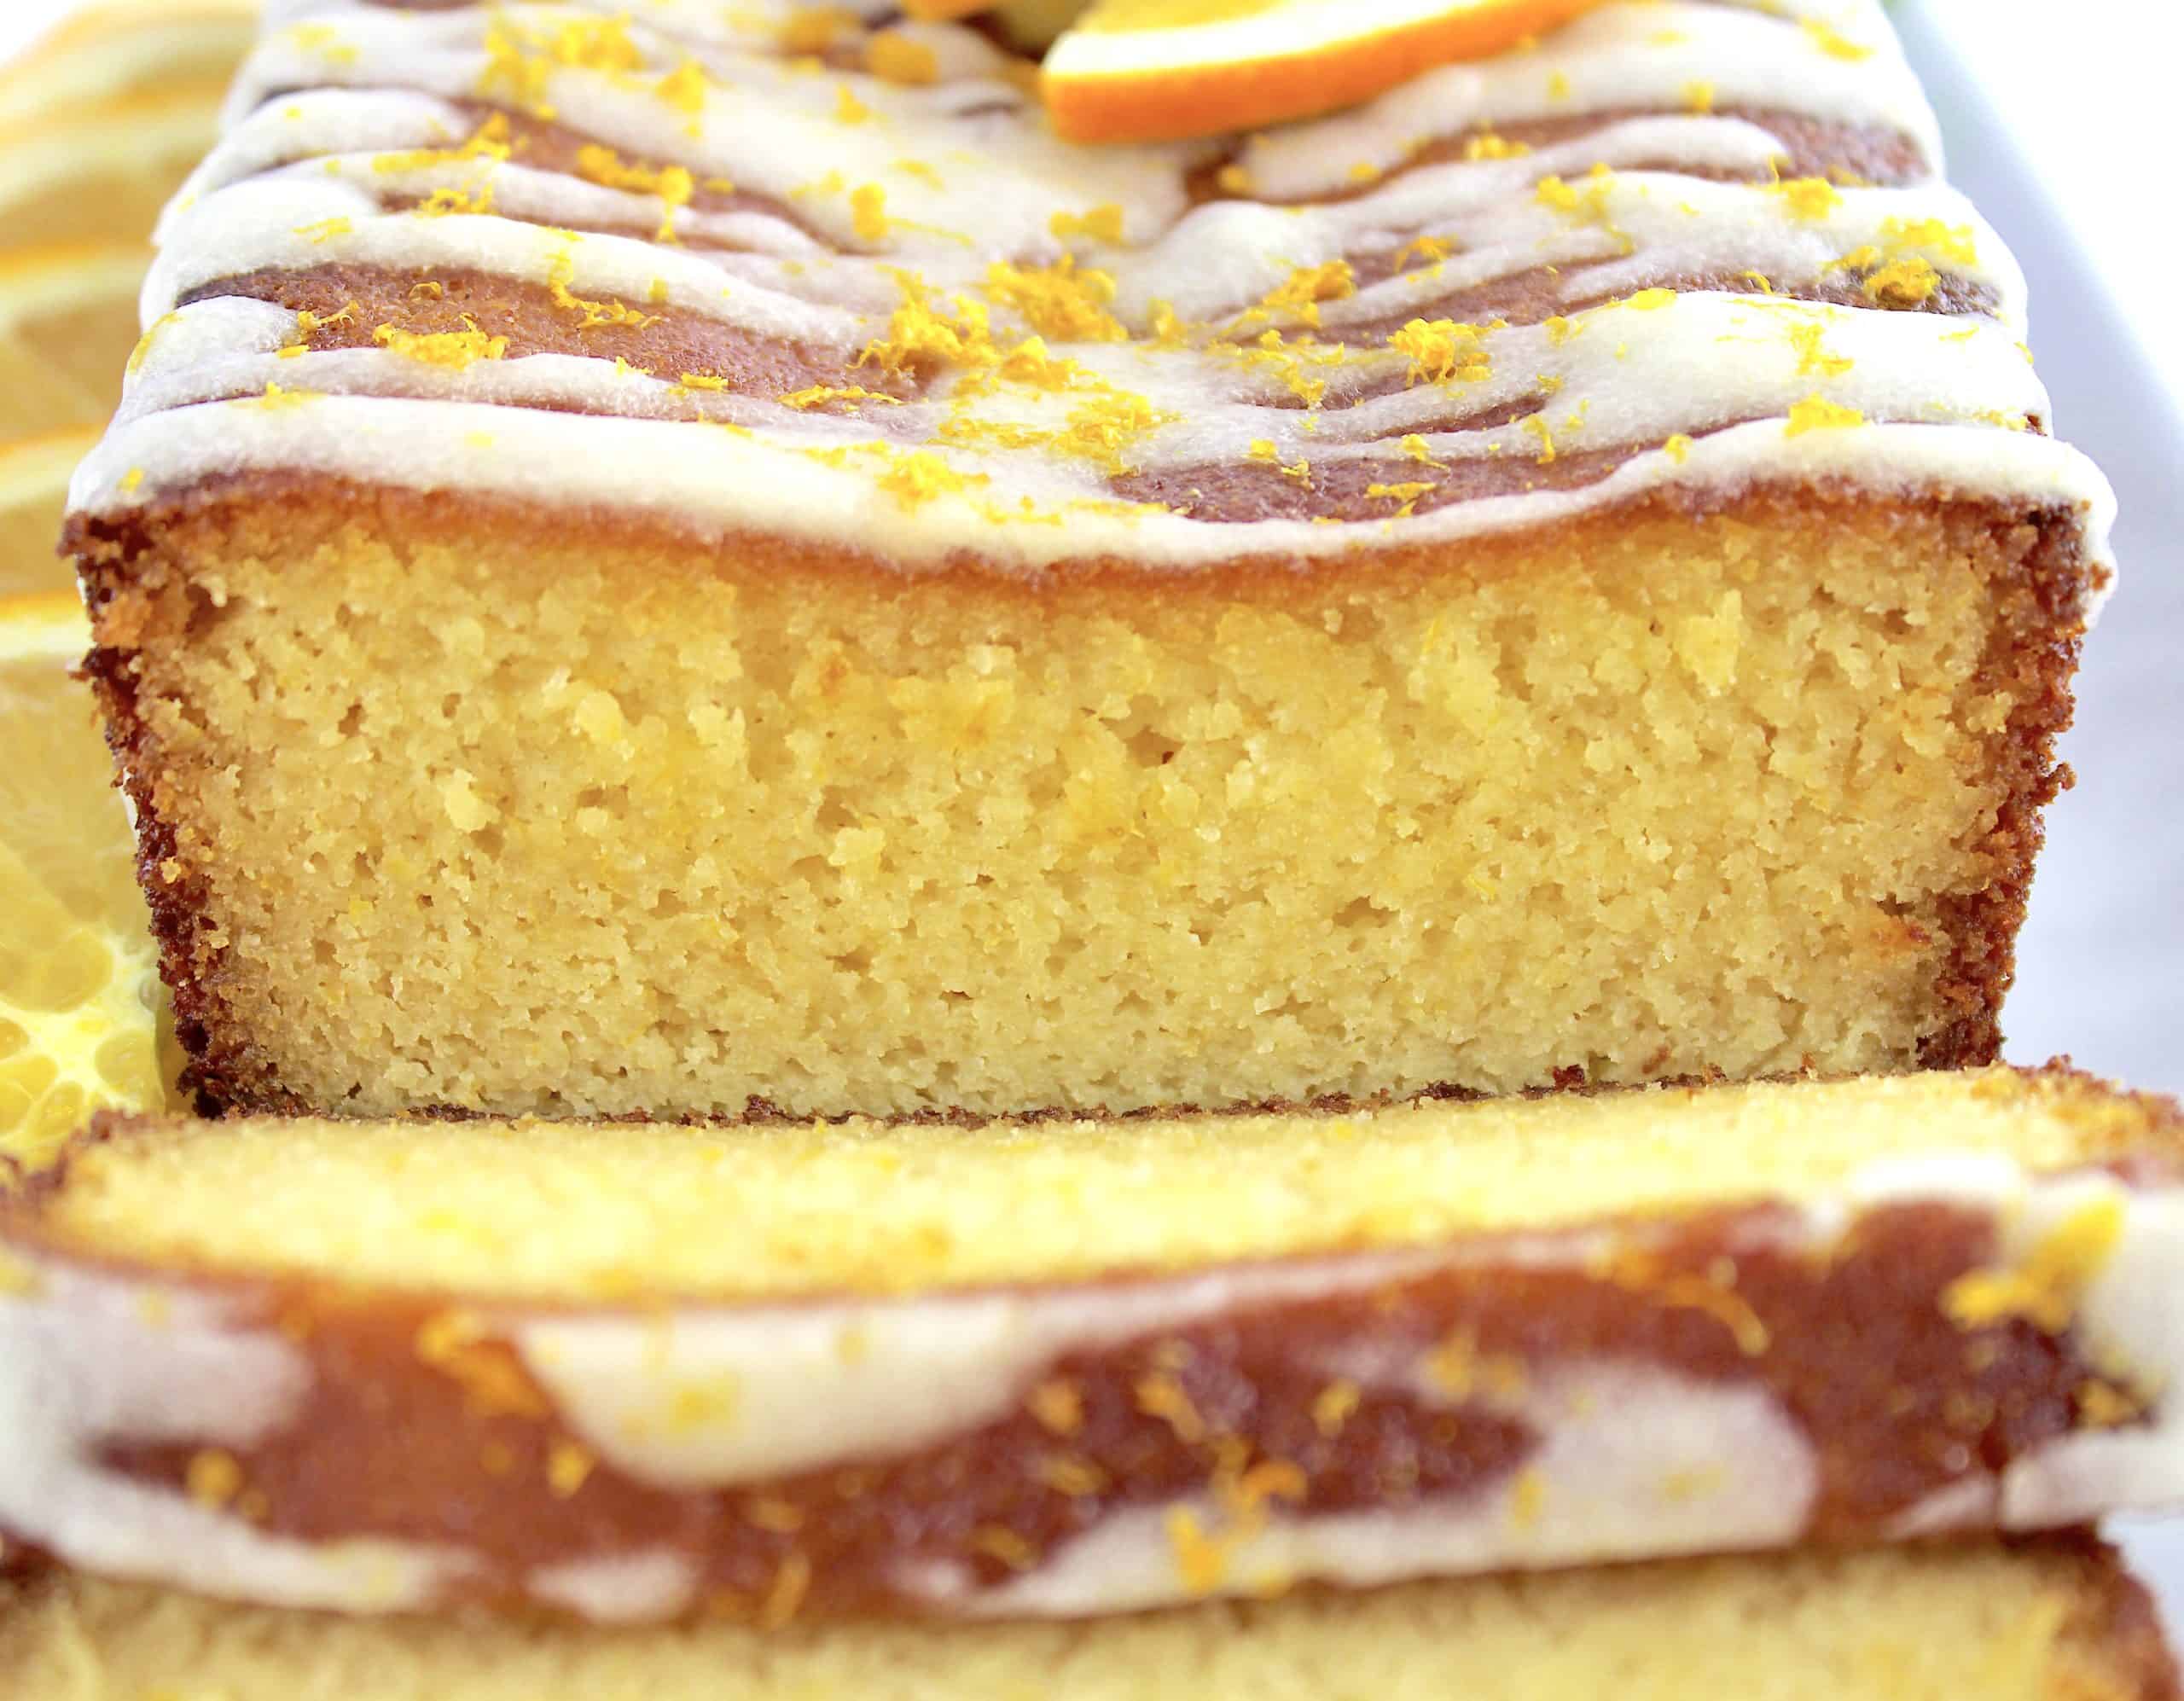 Keto Orange Pound Cake with icing on top